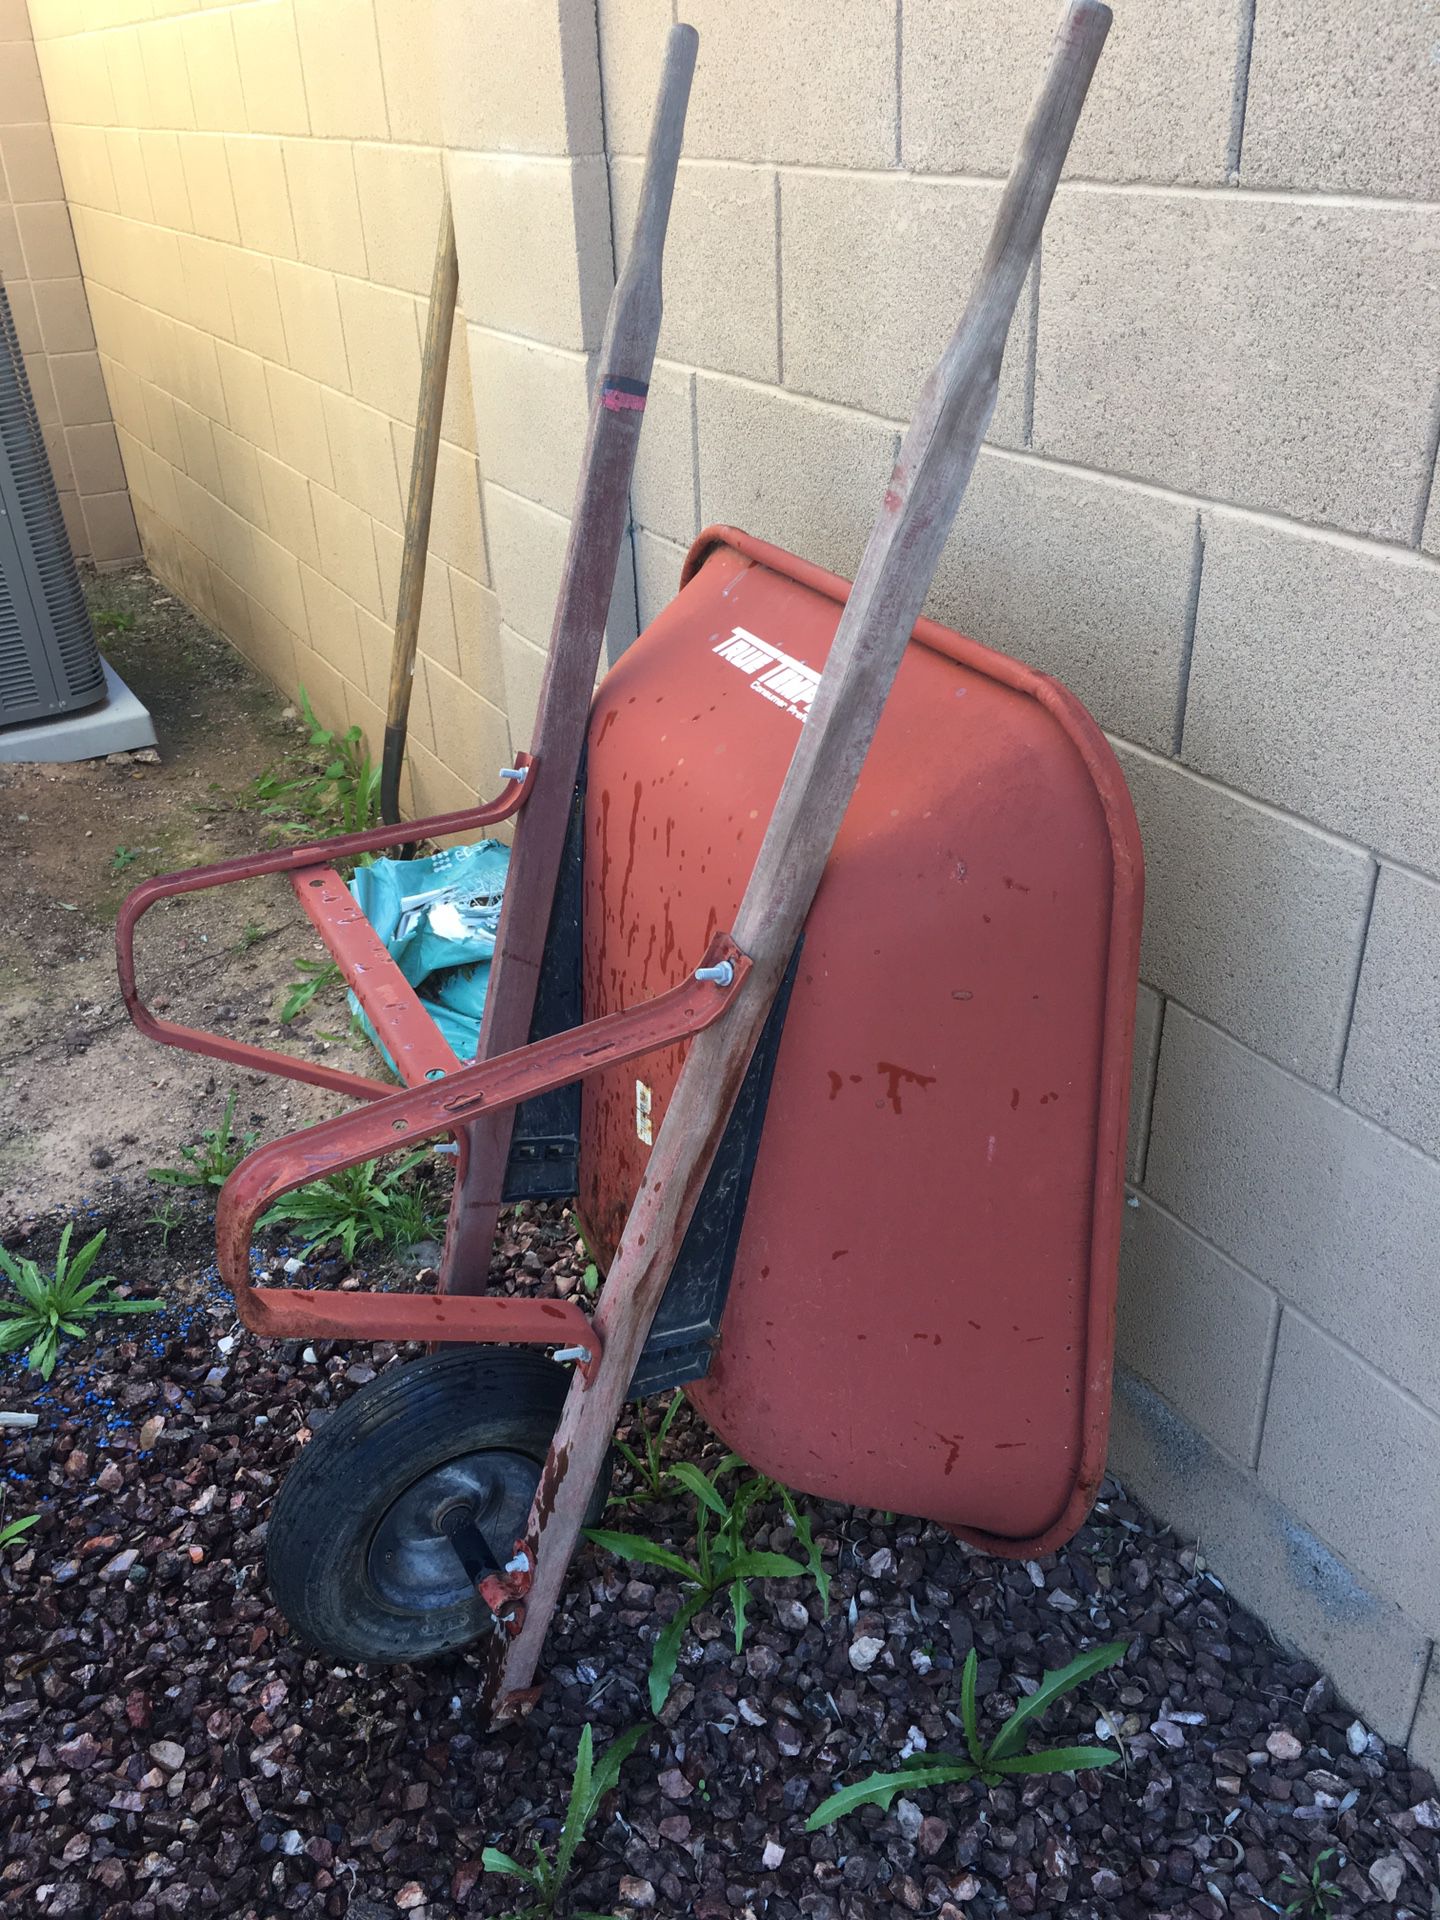 Used wheelbarrow. $40